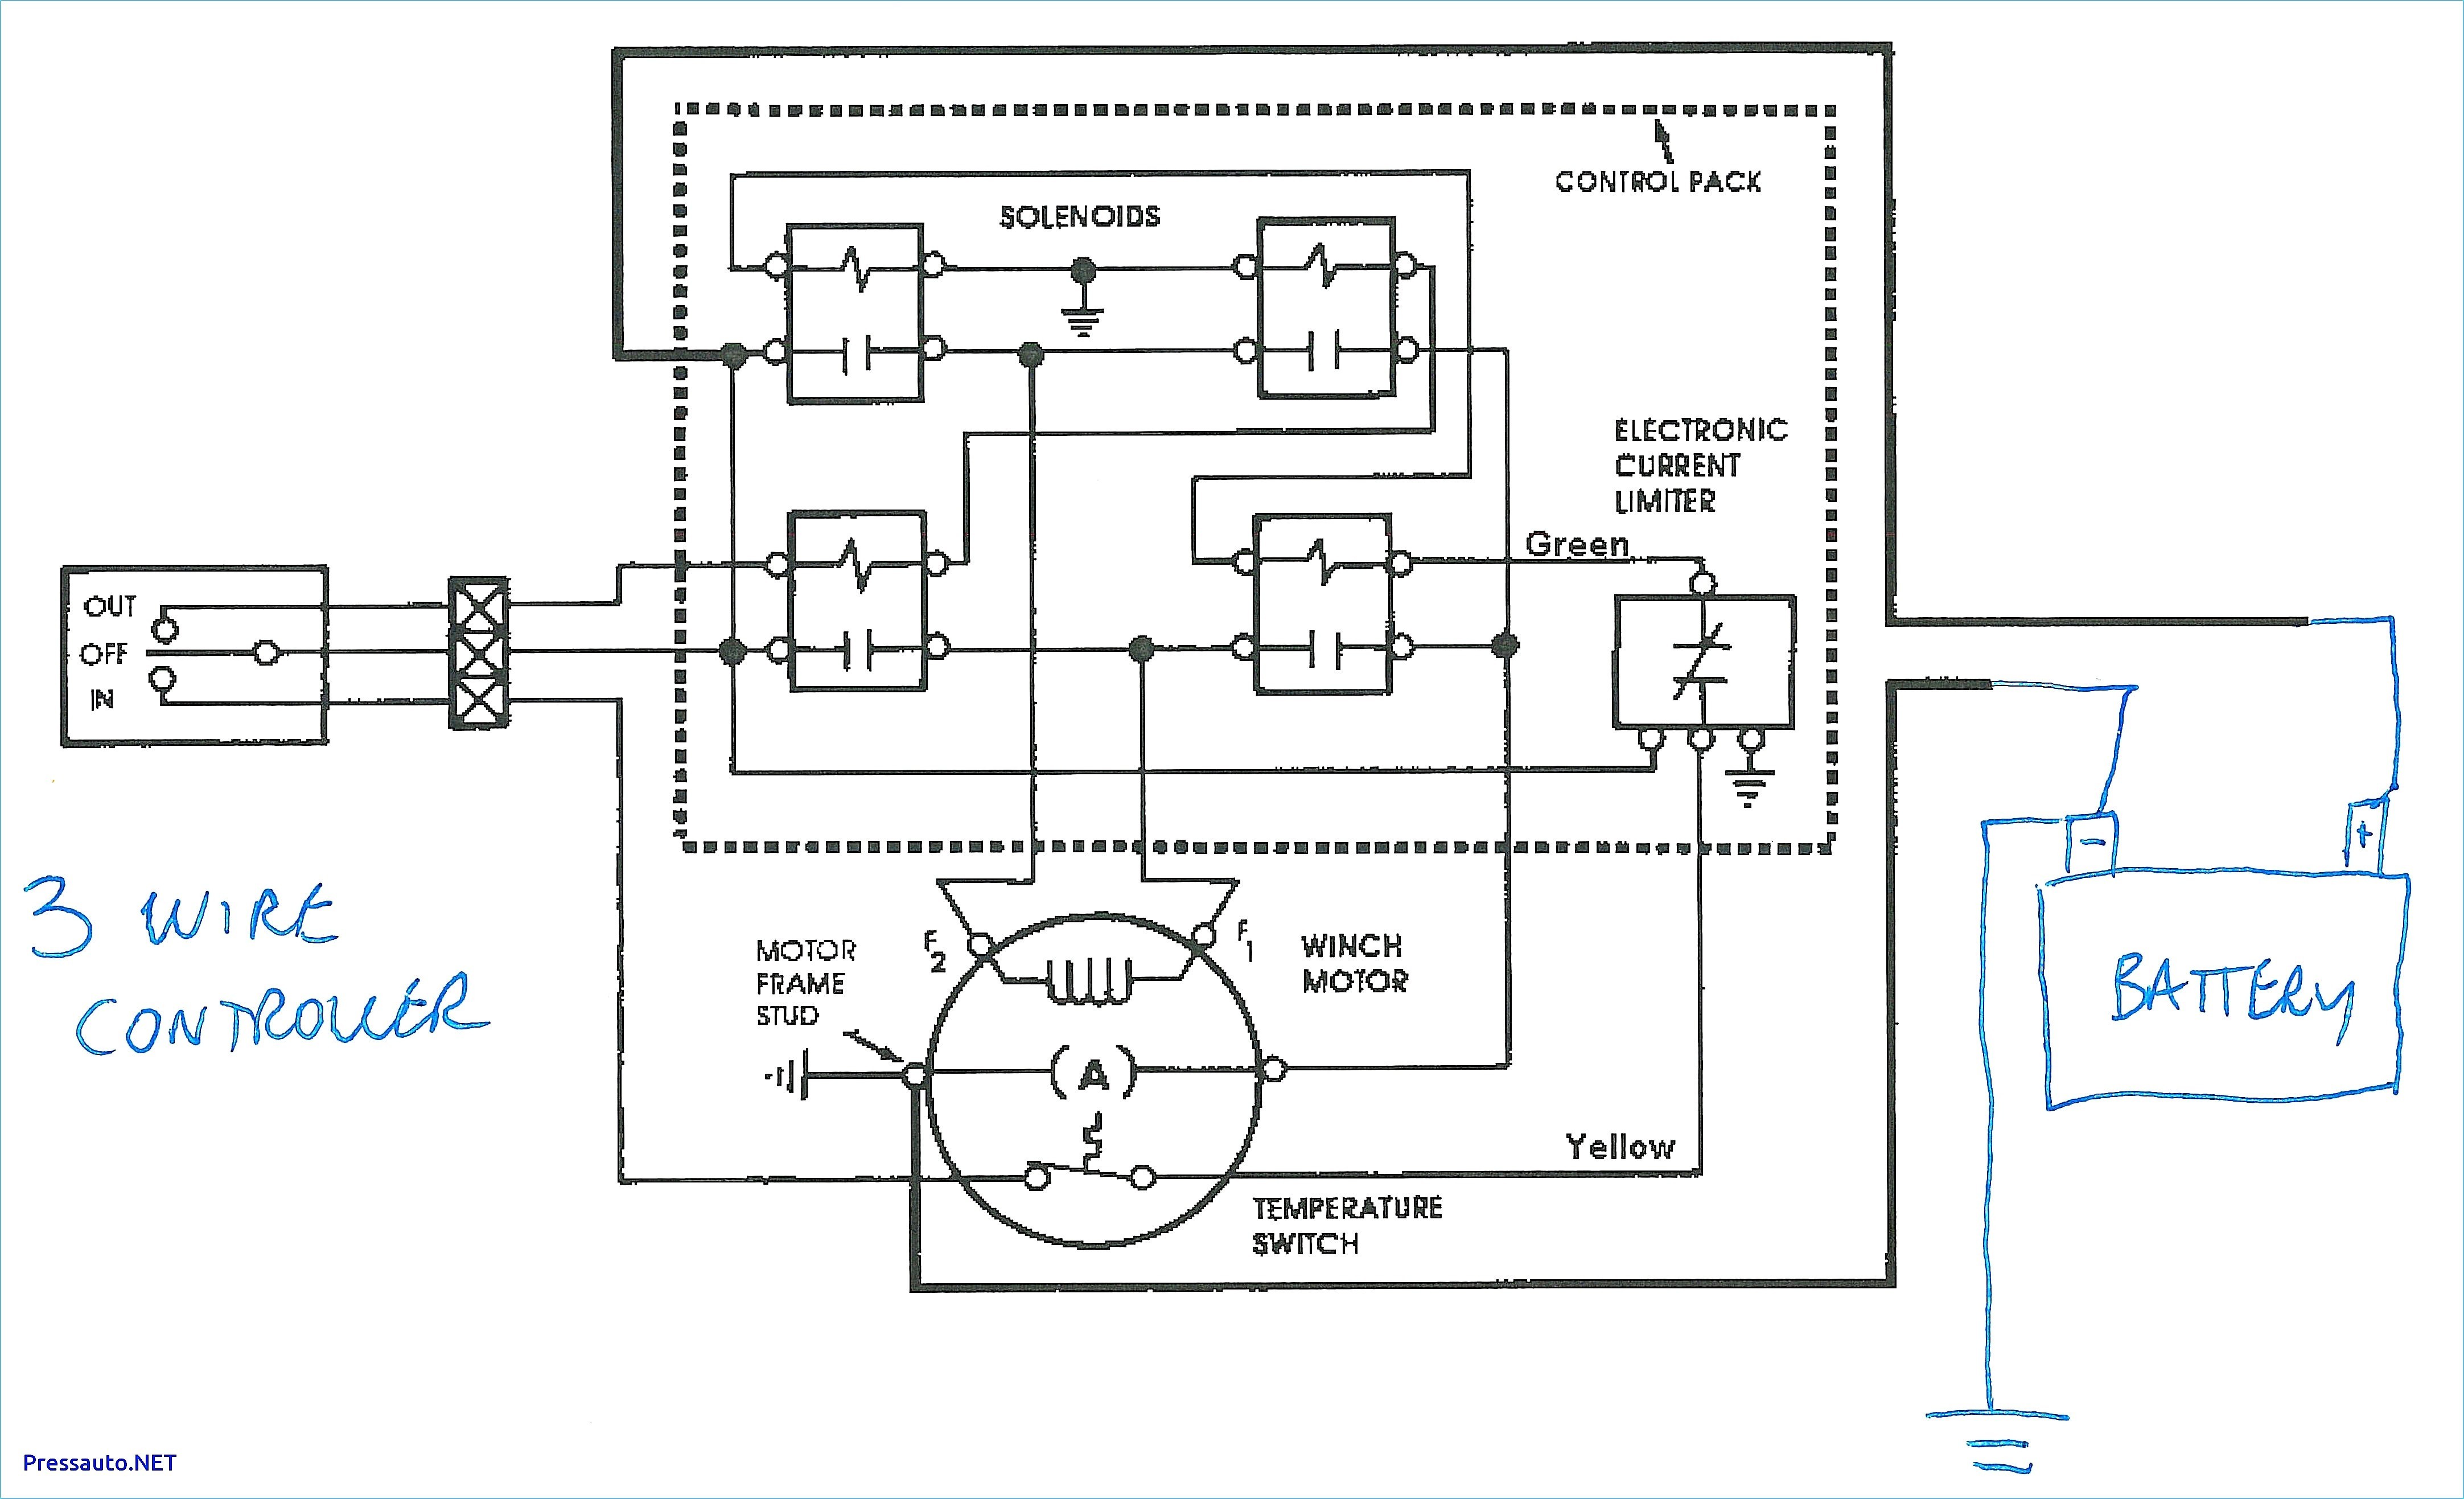 Warn Winch Wiring Diagram 4 solenoid Badland Winch Wiring Diagram Unique Warn 12k Winch Wiring